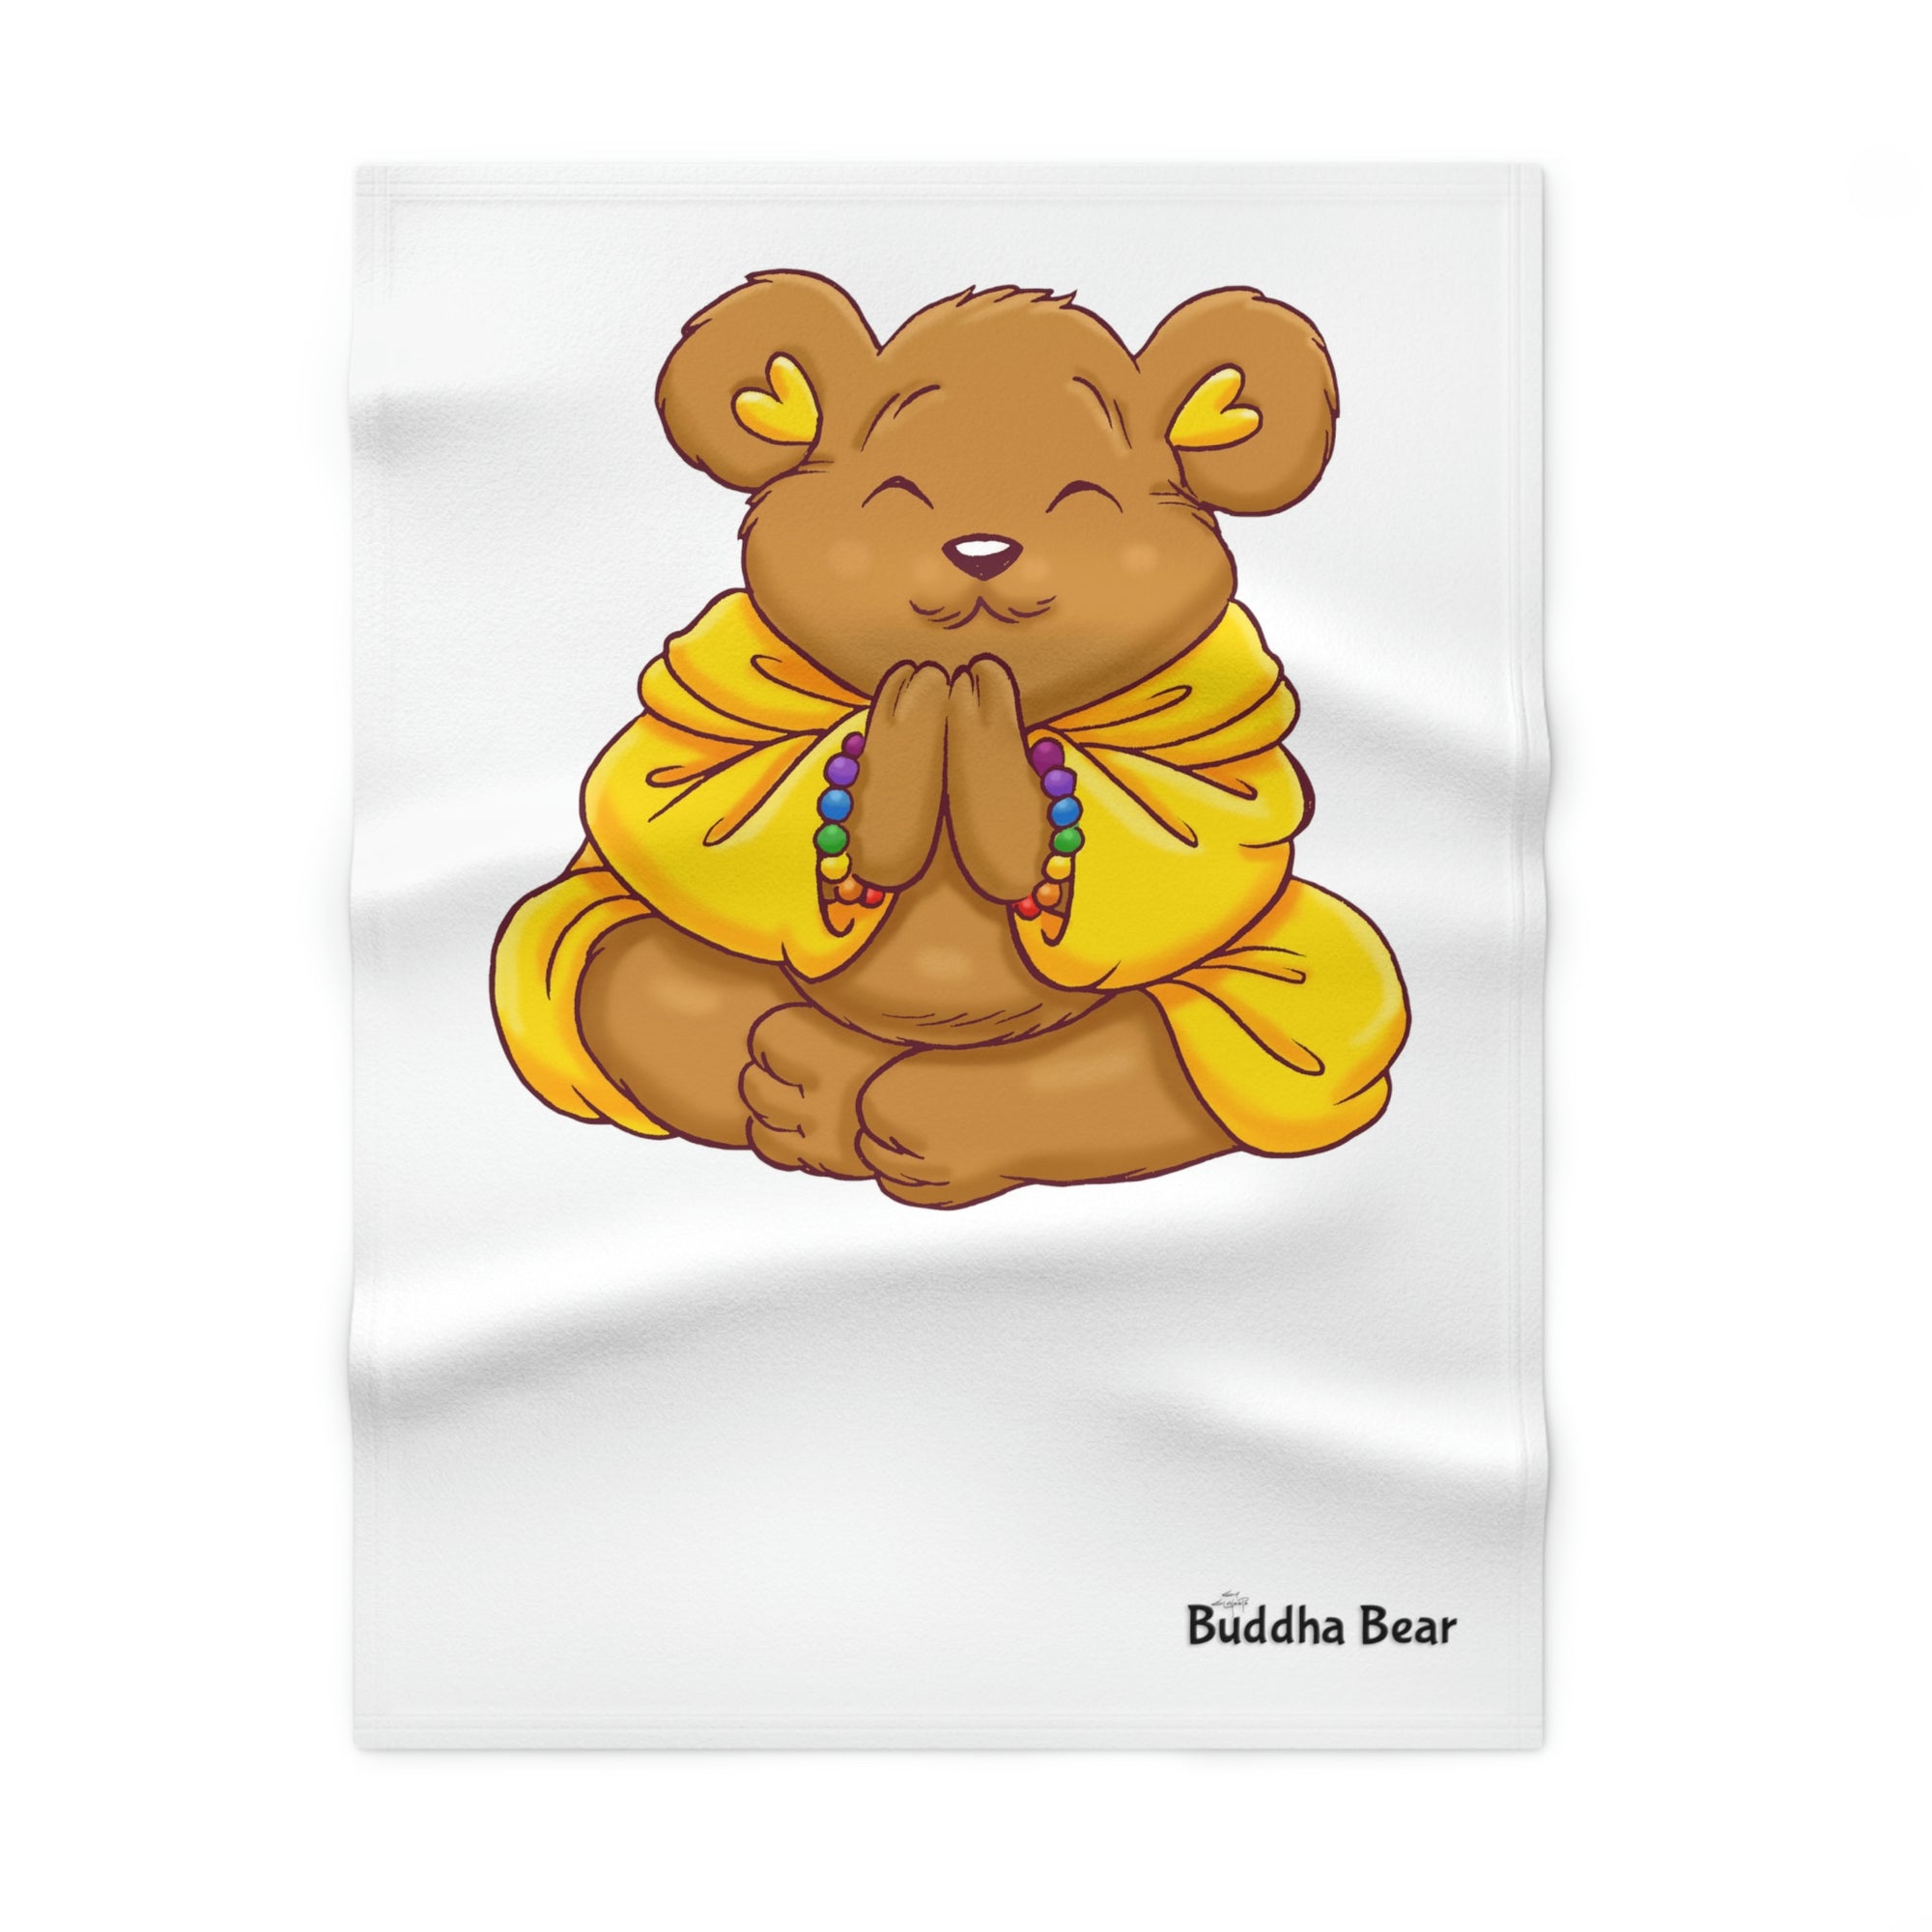 Buddha Bear's Super Soft Fleece Baby Blanket